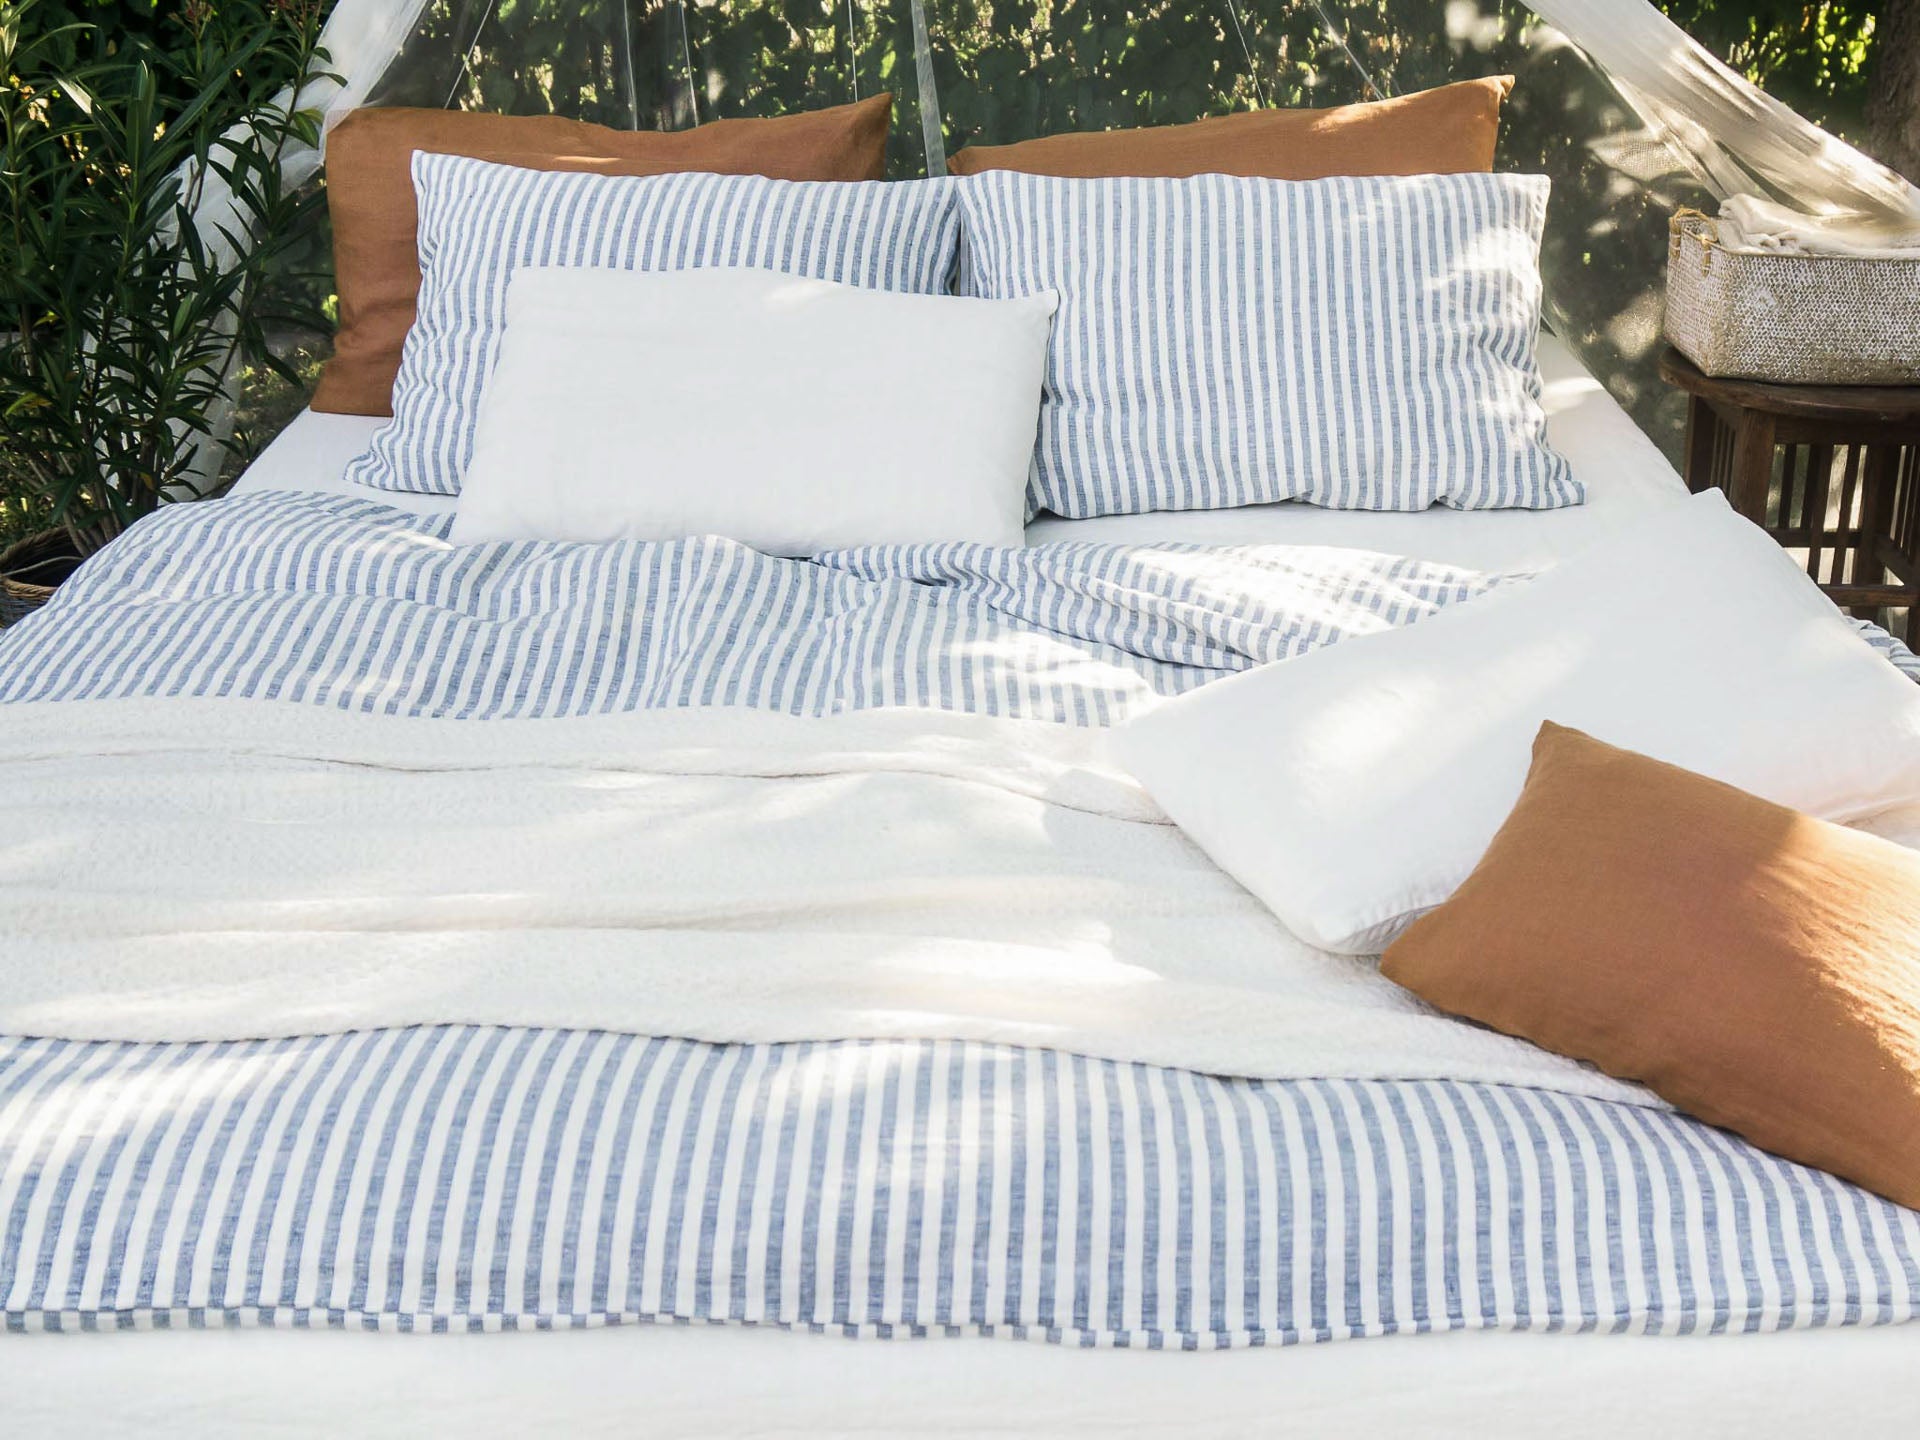 Blue Striped Linen Bedding set outdoor with a net